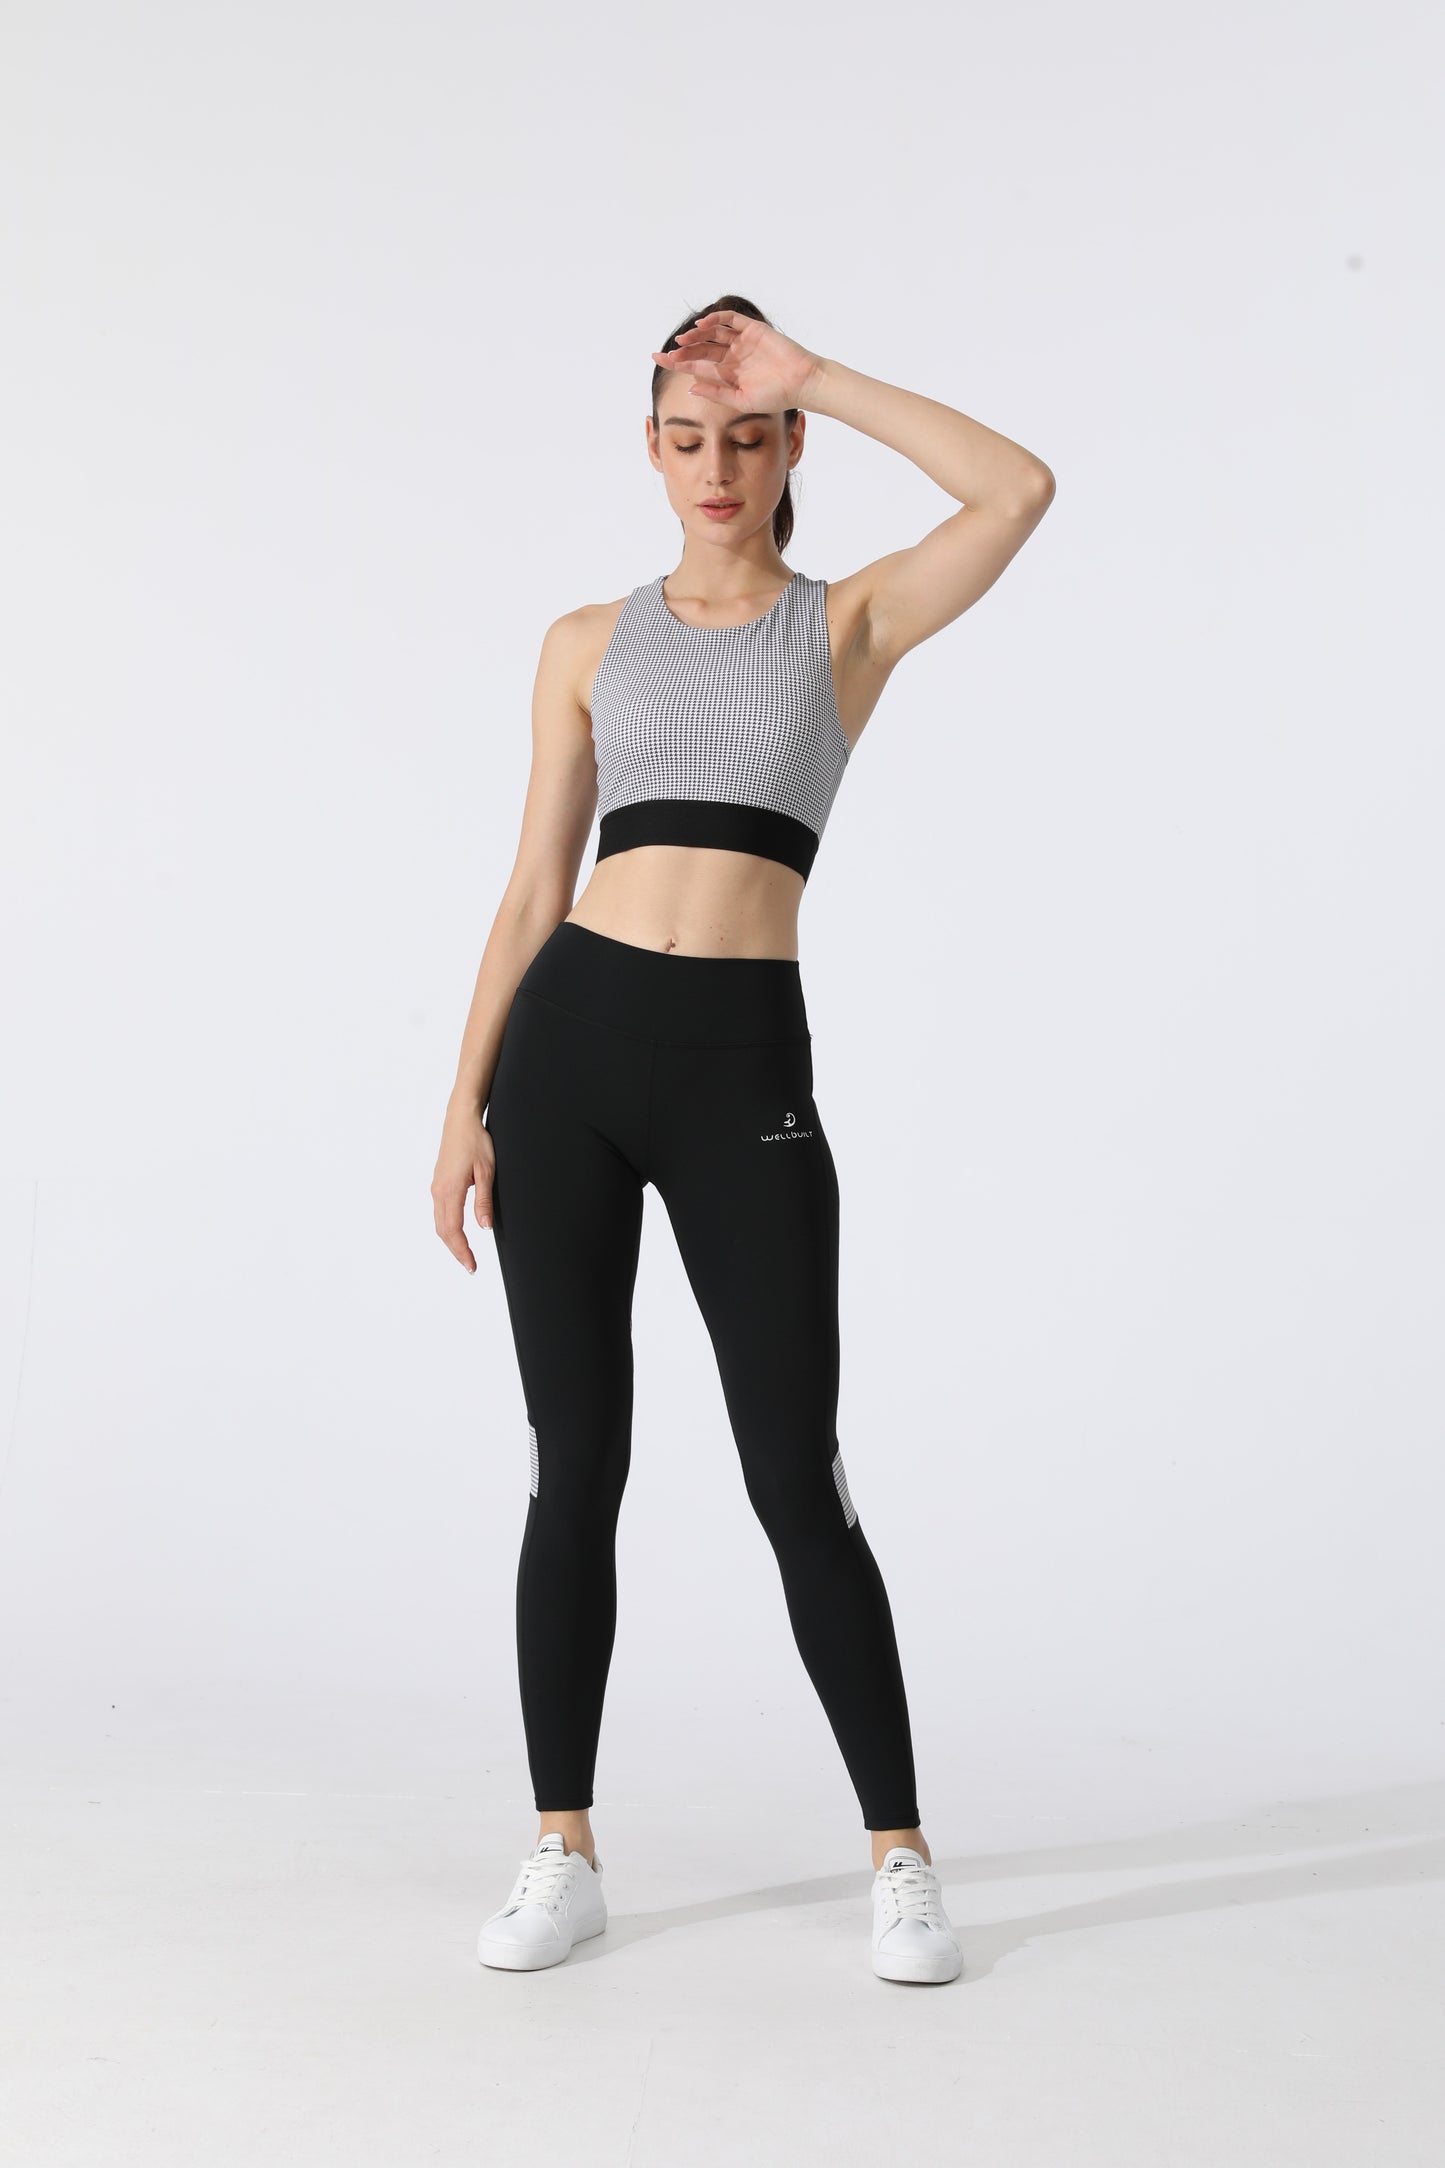 21-79-80 outfit Split skirt Yoga women's conservative high waist slim sports suit